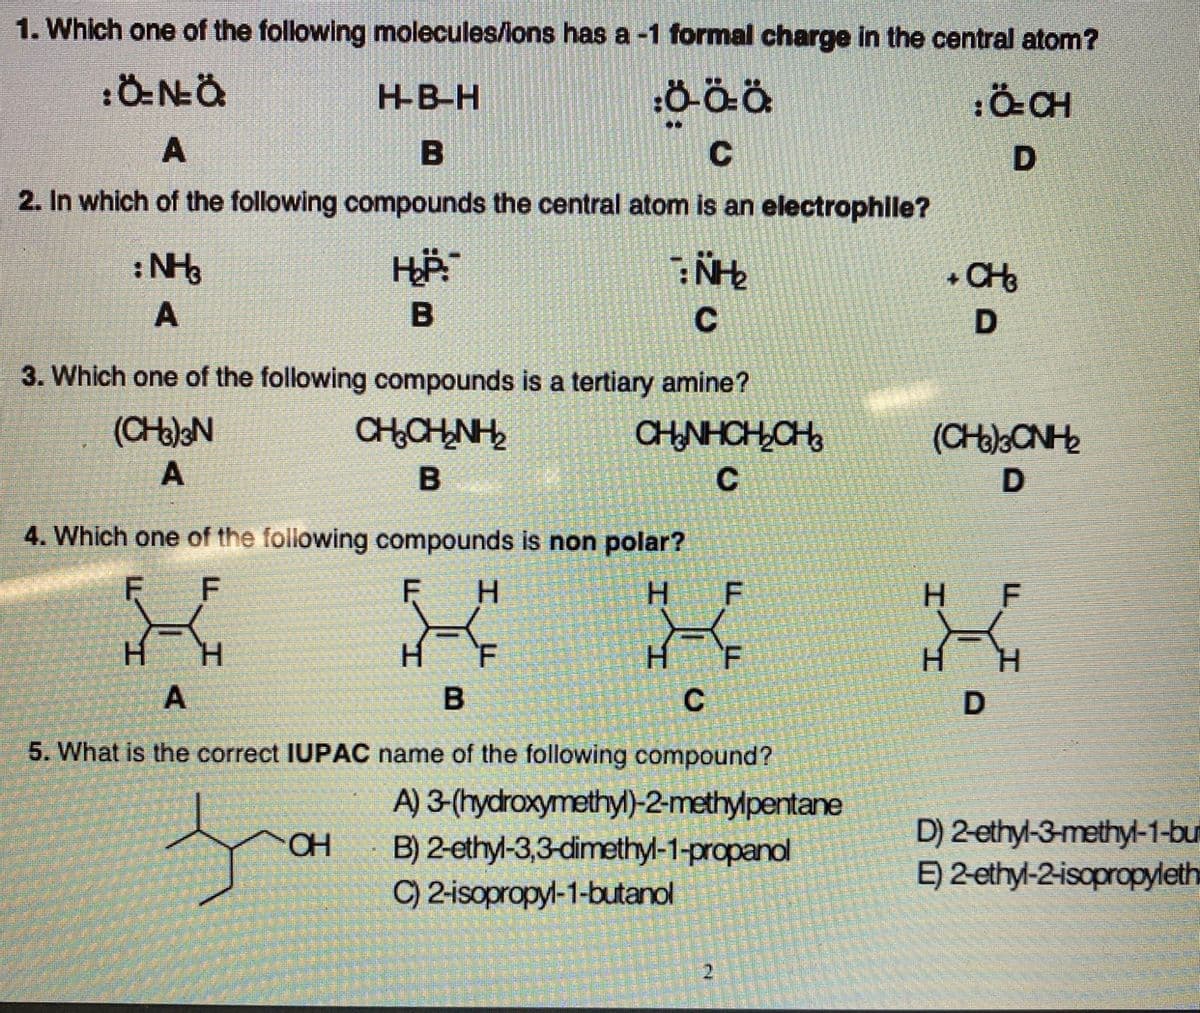 1. Which one of the following molecules/lons has a -1 formal charge in the central atom?
HB-H
B
C
2. In which of the following compounds the central atom is an electrophile?
:N
+ CH
A
B
3. Which one of the following compounds is a tertiary amine?
(CHalN
CHNHCH,CH
(CHoCNH
C
D
4. Which one of the following compounds is non polar?
F
H.
F
H F
H.
H.
H.
H.
F
H.
H.
C
5. What is the correct IUPAC name of the following compound?
A) 3-(hydroxymethyl)-2-methylpentane
D) 2-ethyl-3-methyl-1-bu
E) 2-ethyl-2-isopropyleth
B) 2-ethyl-3,3-dimethyl-1-propanol
C) 2-isopropyl-1-butanol
